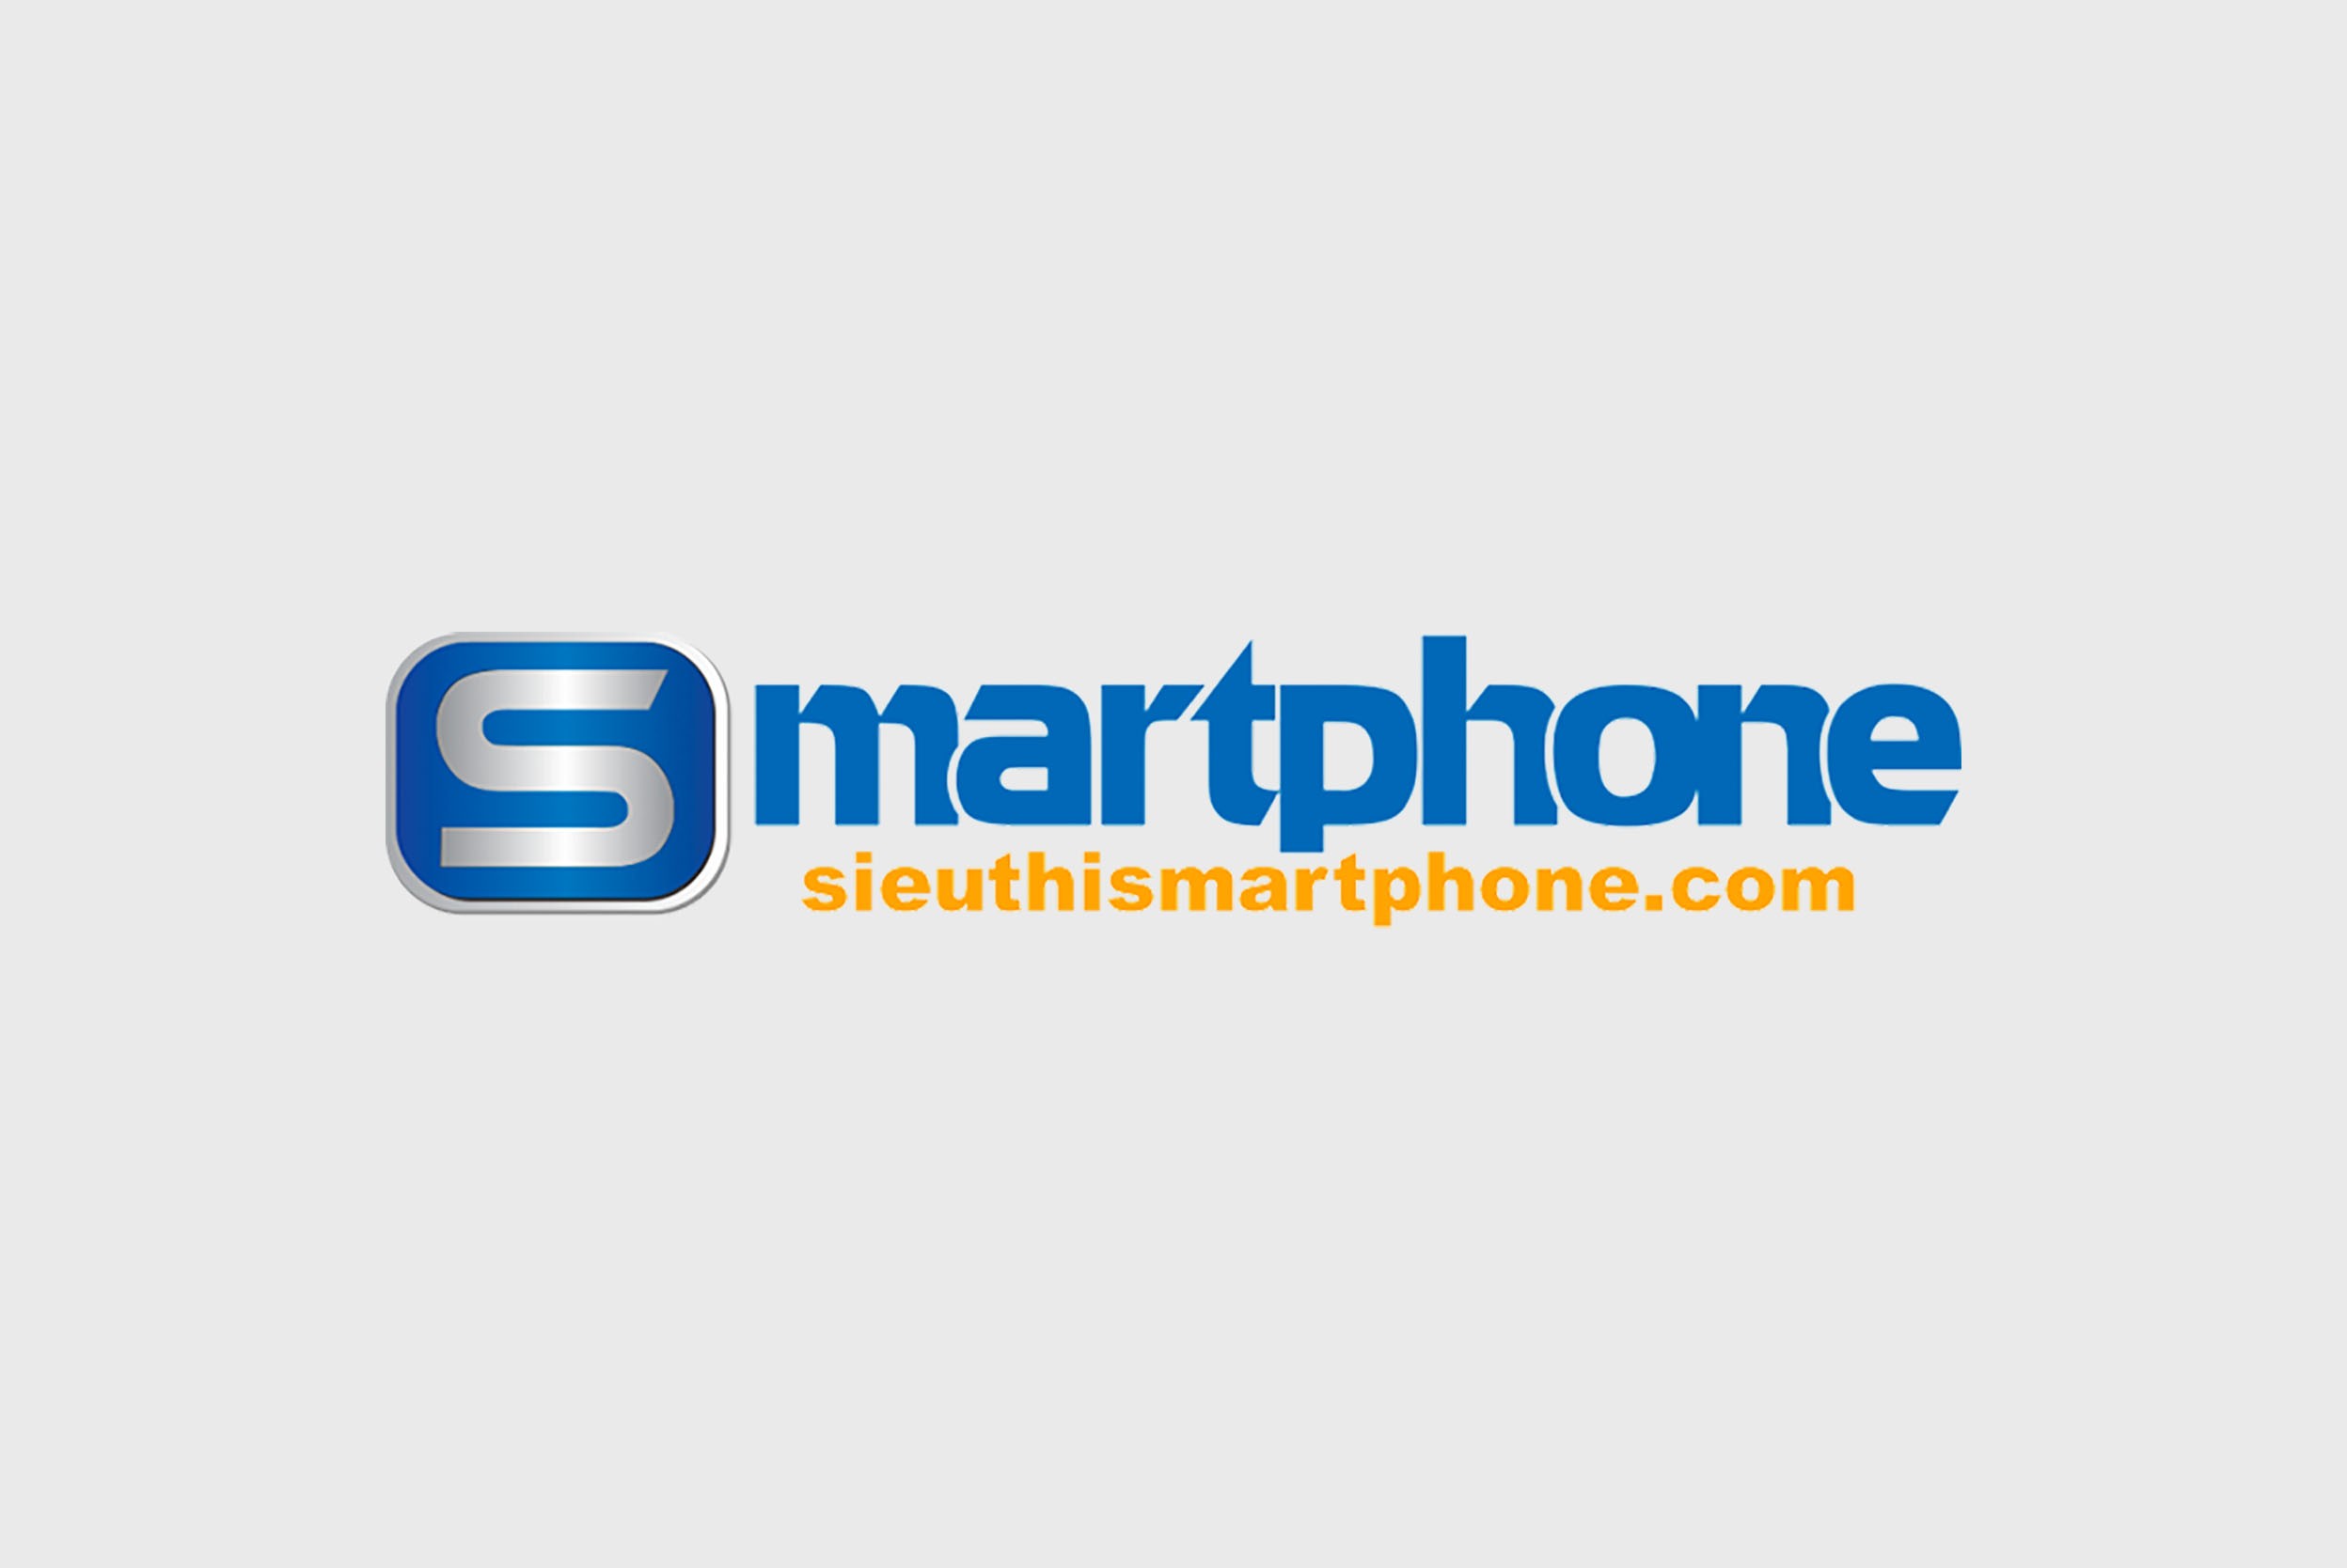 sieu-thi-smartphone-logo